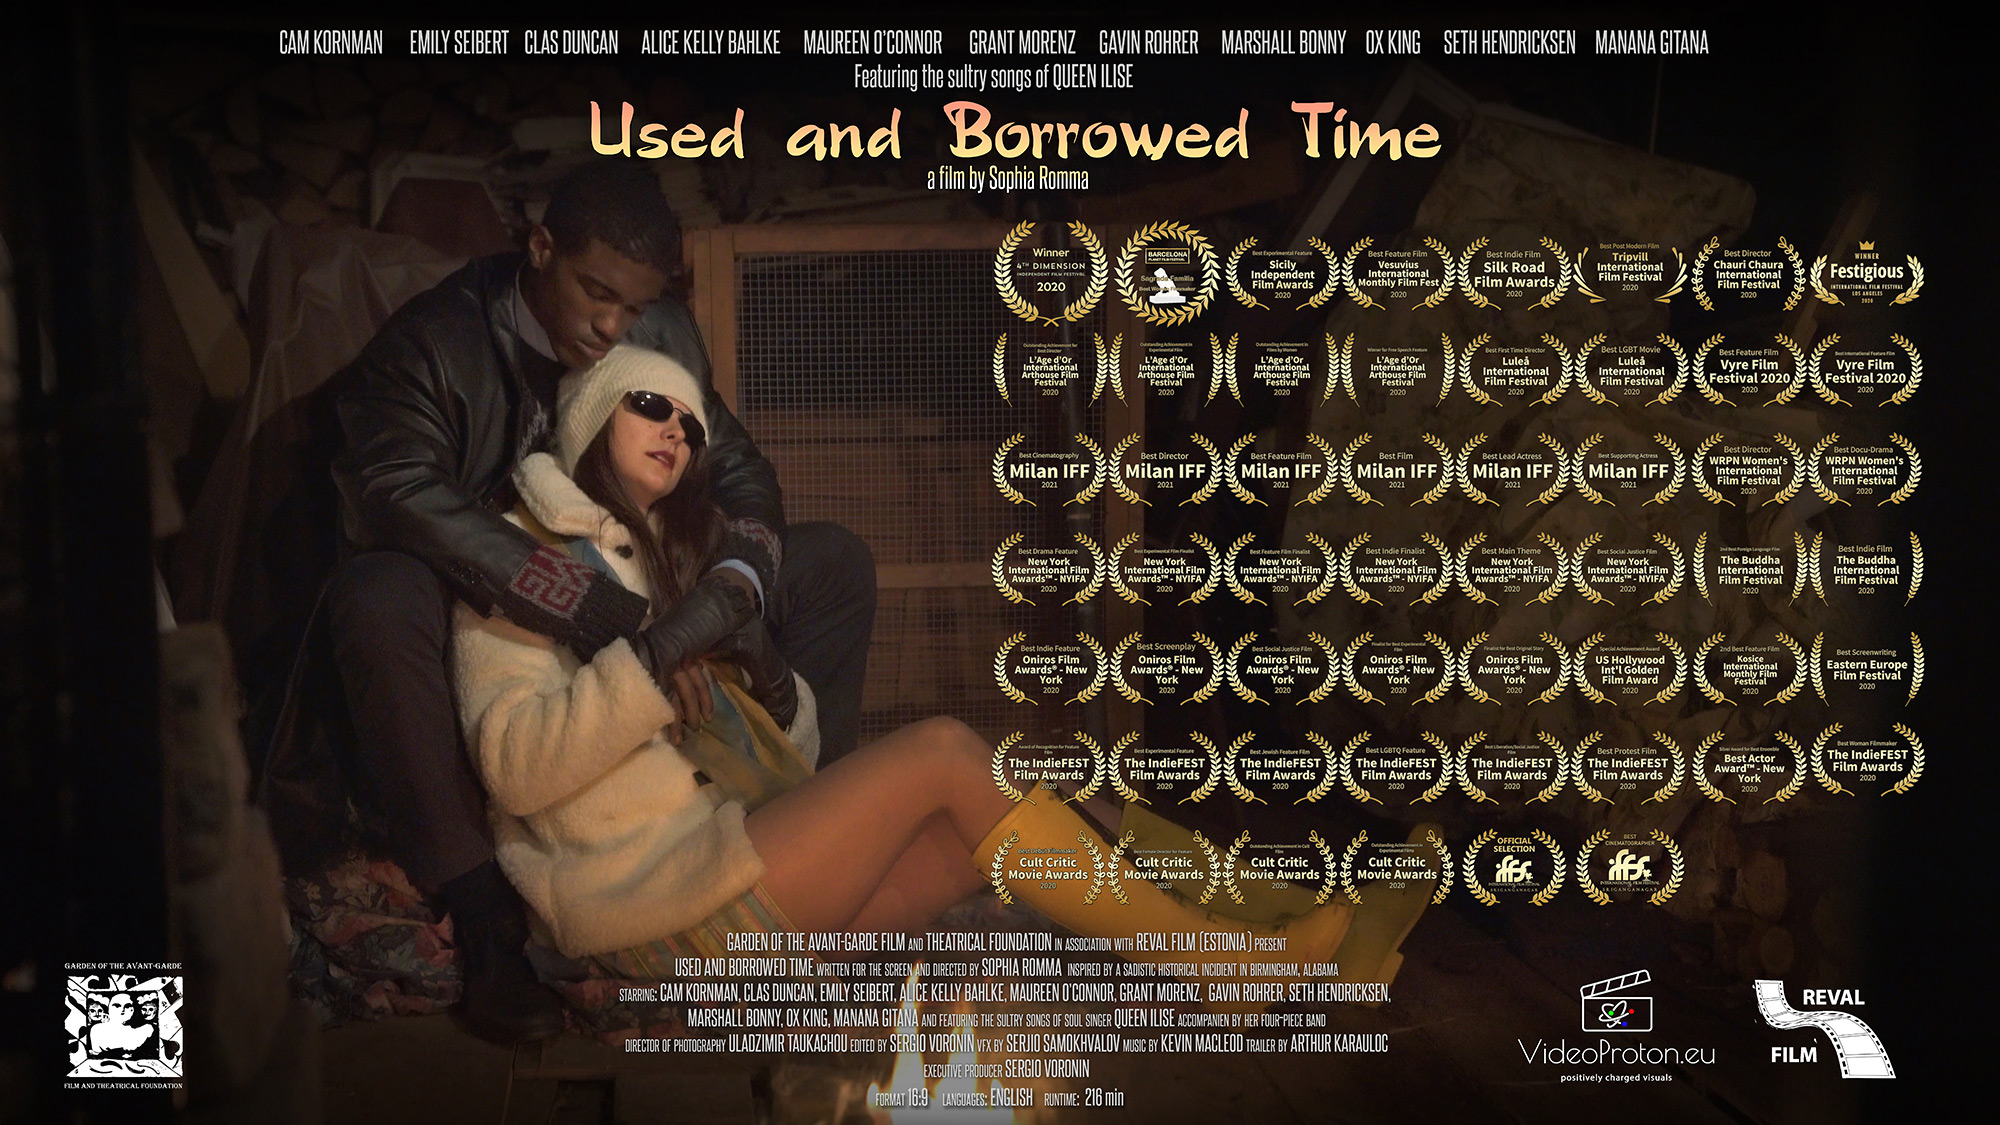 Used and Borrowed Time by Sophia Romma, Cinematographer Uladzimir Taukachou, NY